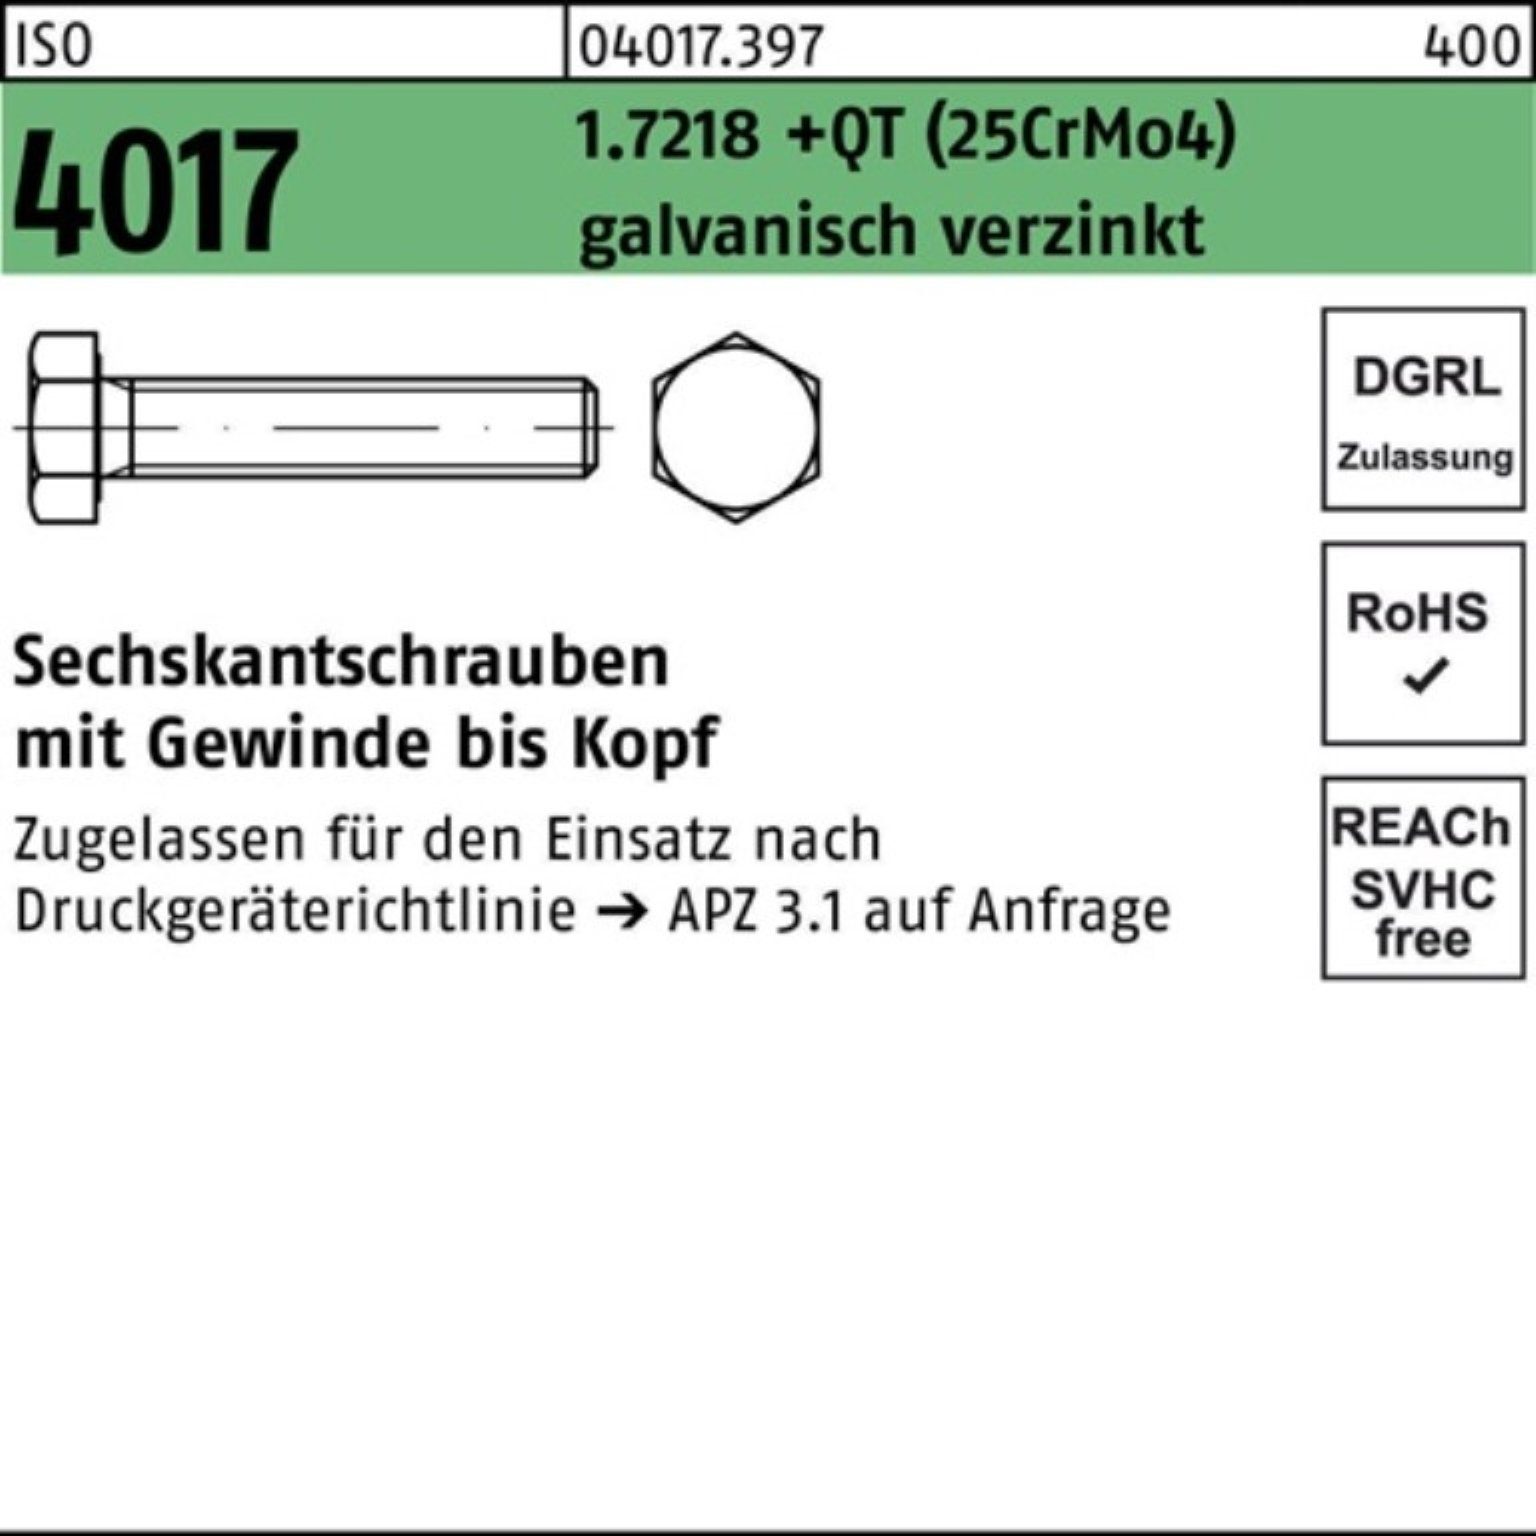 Bufab Sechskantschraube 100er Pack Sechskantschraube VG 4017 (25CrMo4) 1.7218 g ISO +QT M20x80